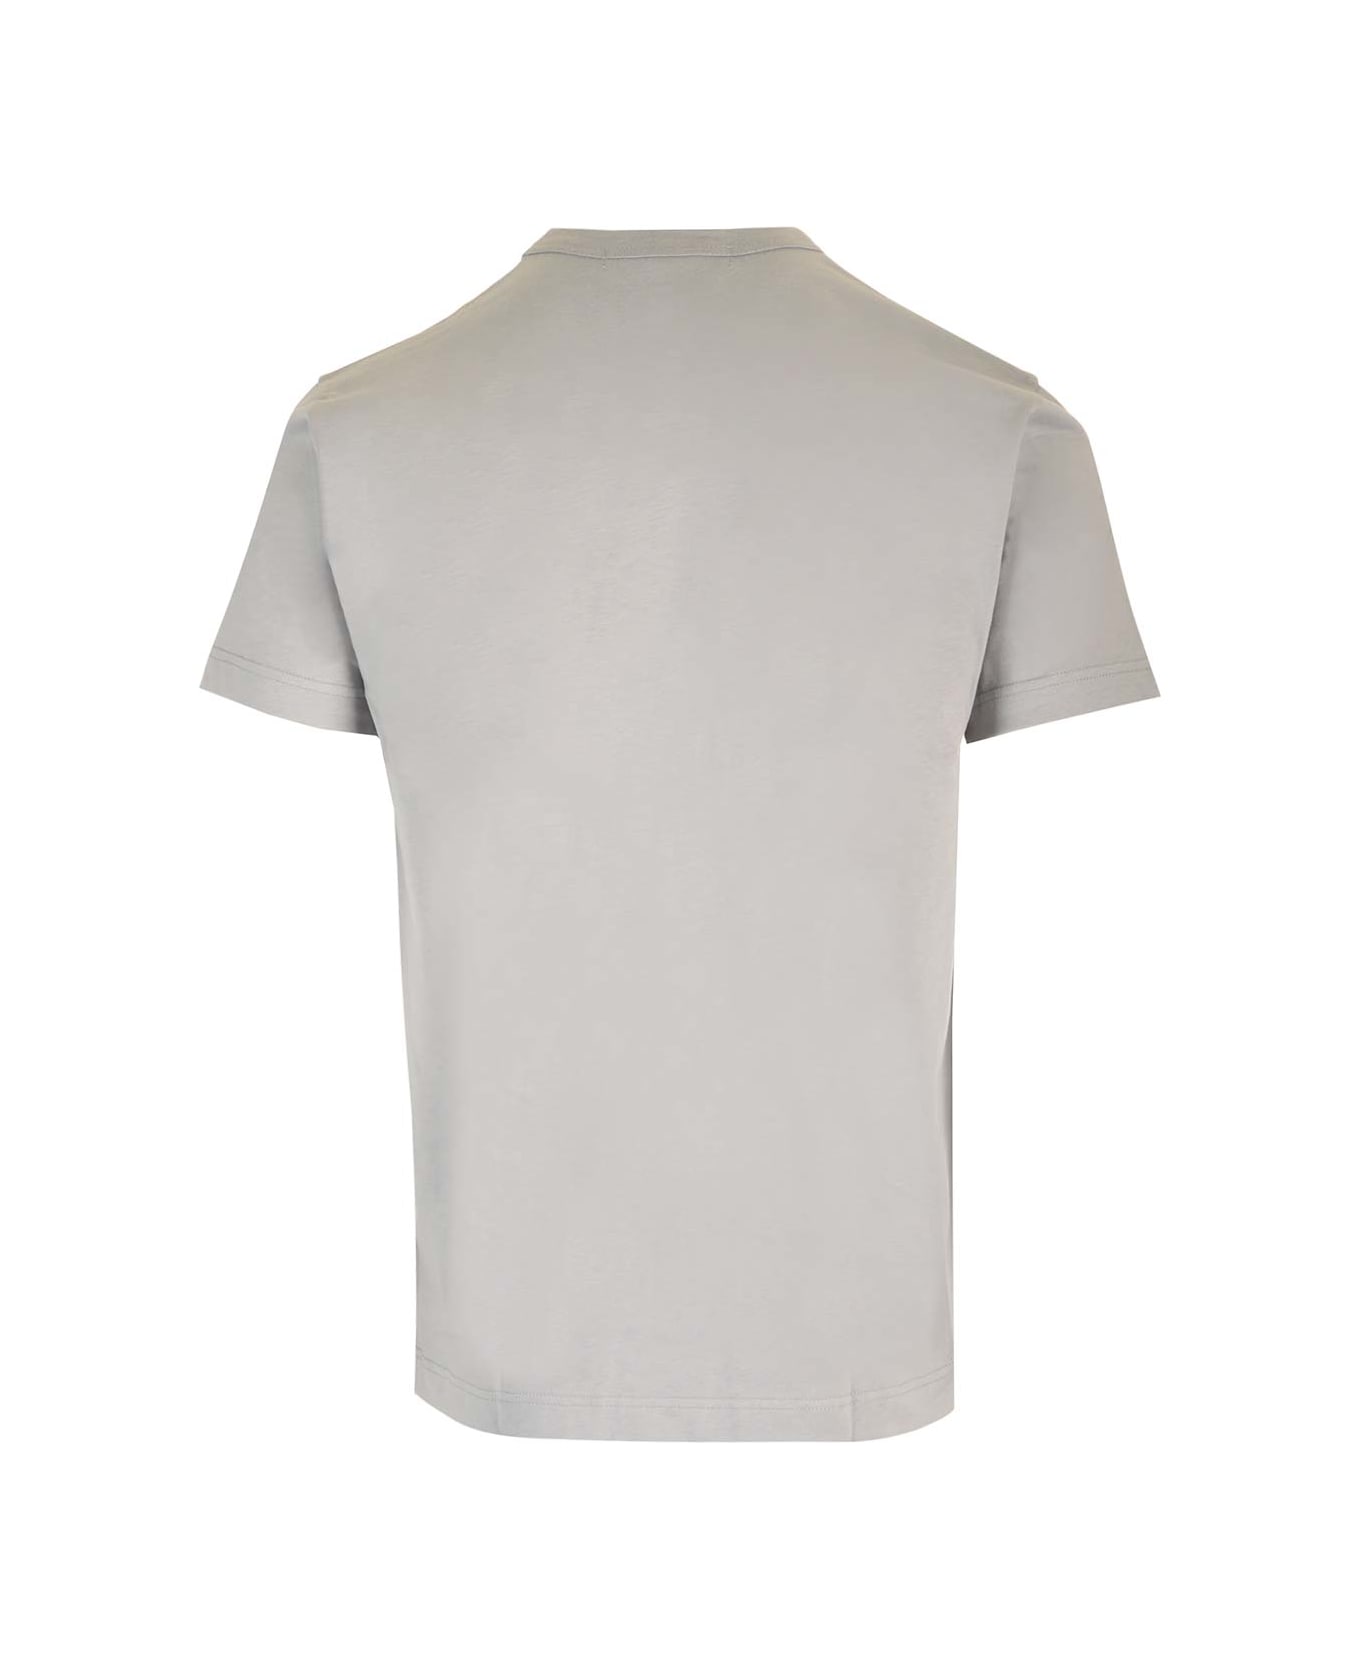 Comme des Garçons Shirt Grey Slim T-shirt - GREY シャツ